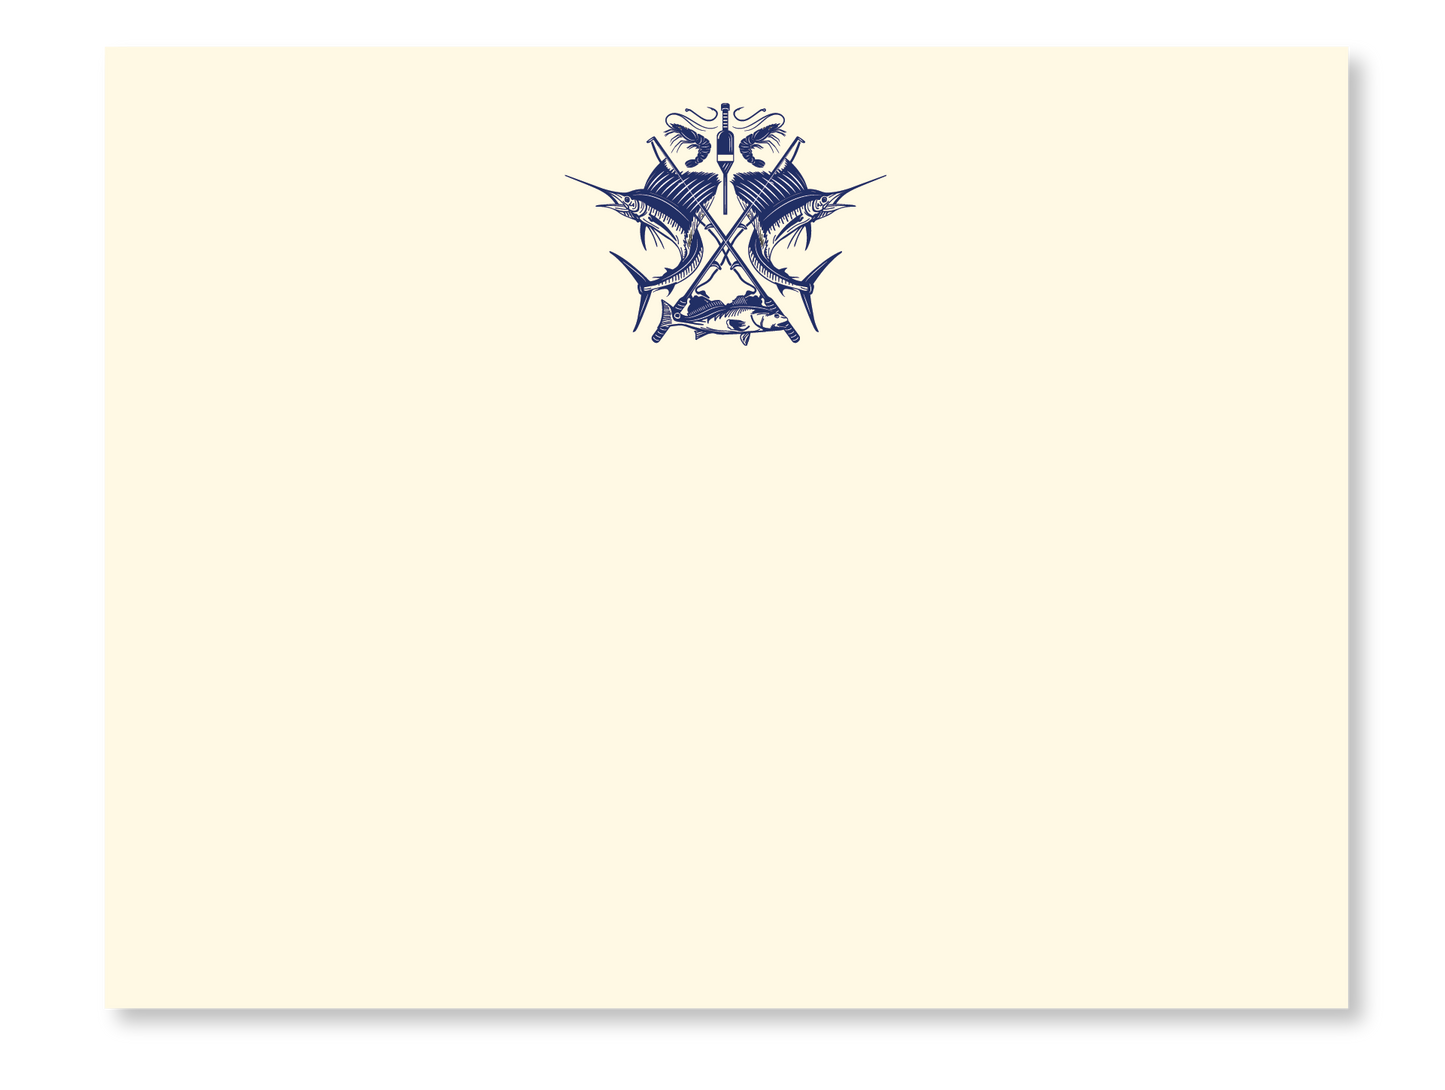 Flat Note Stationery - Angler Crest